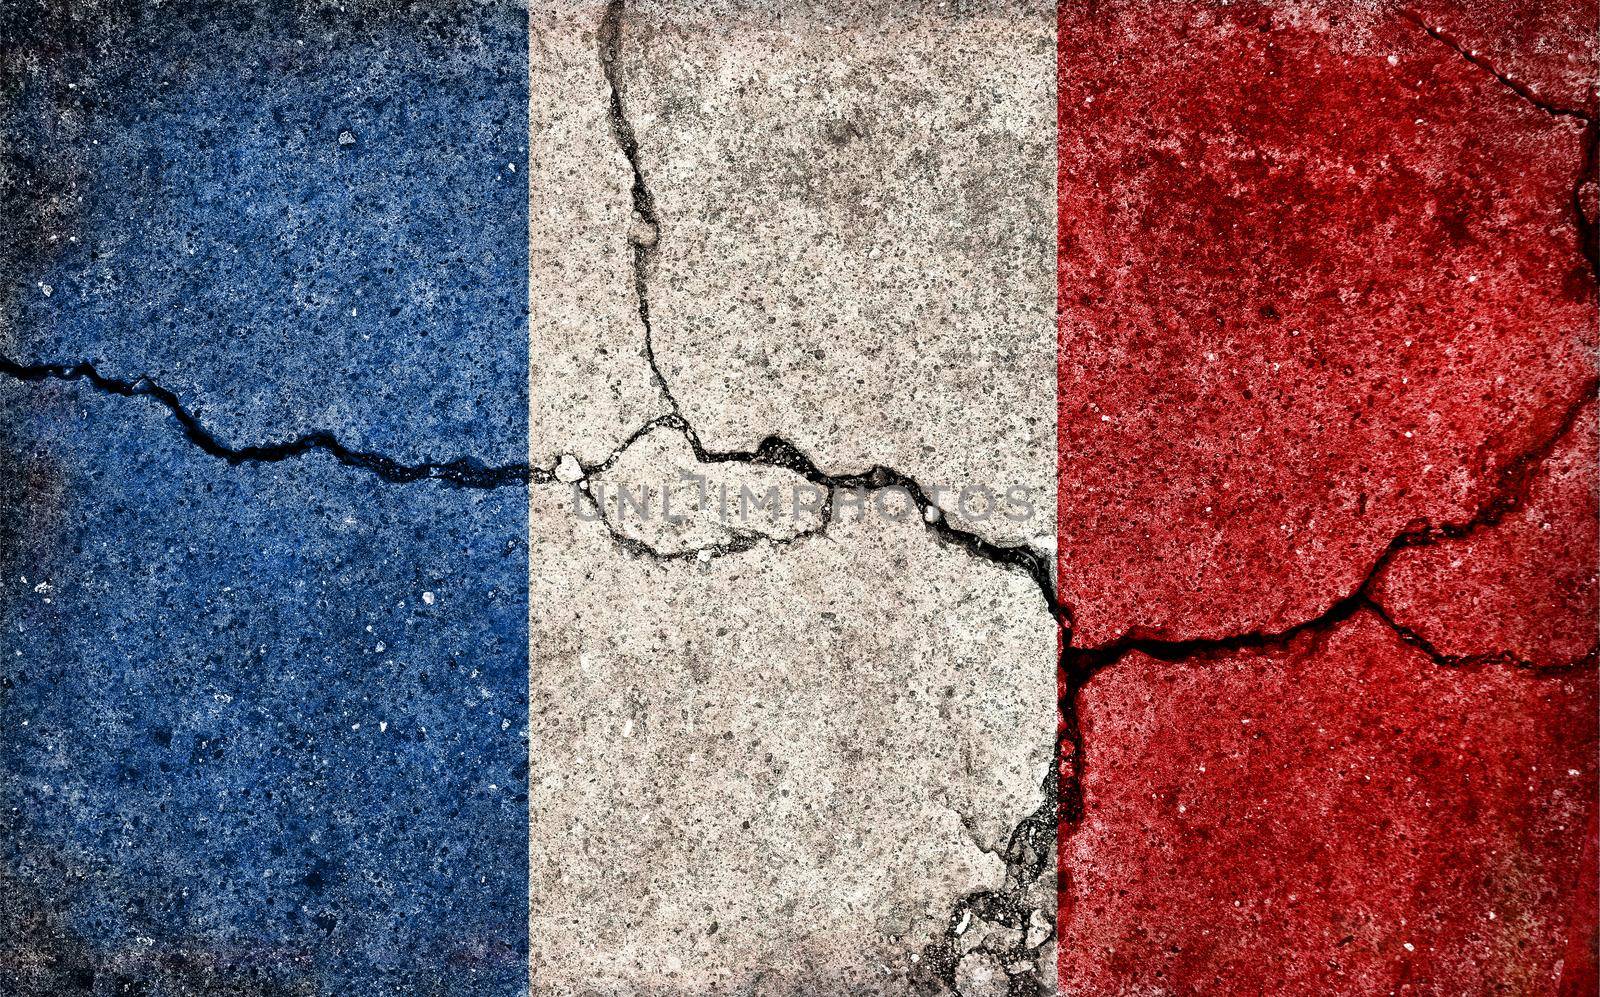 Grunge country flag illustration (cracked concrete background) / France by barks